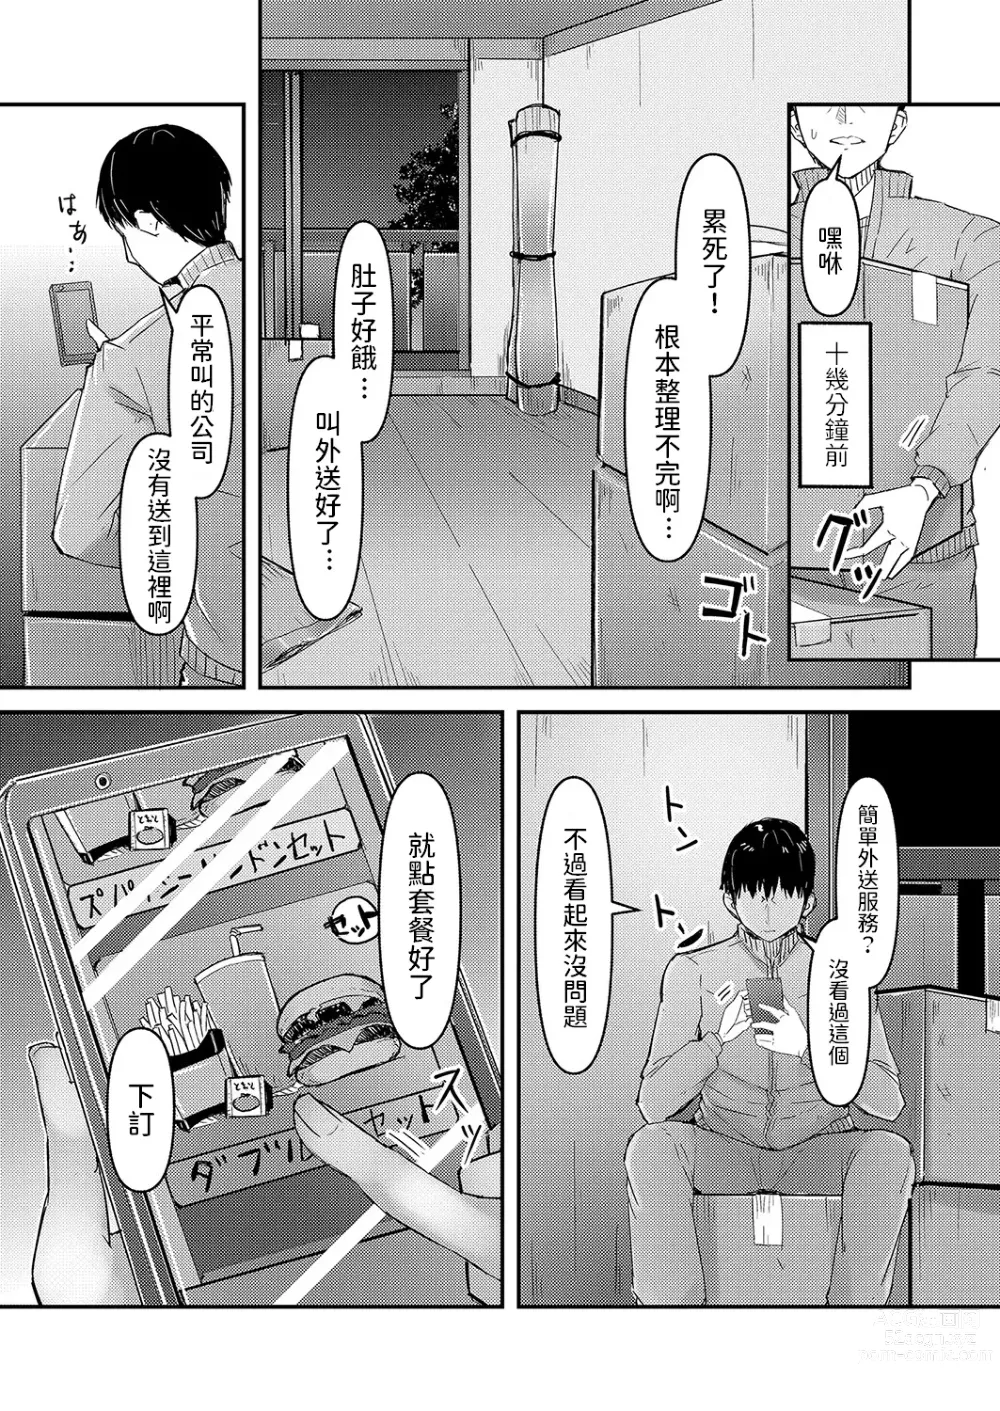 Page 2 of manga Takuhai JK Ura Service Appli